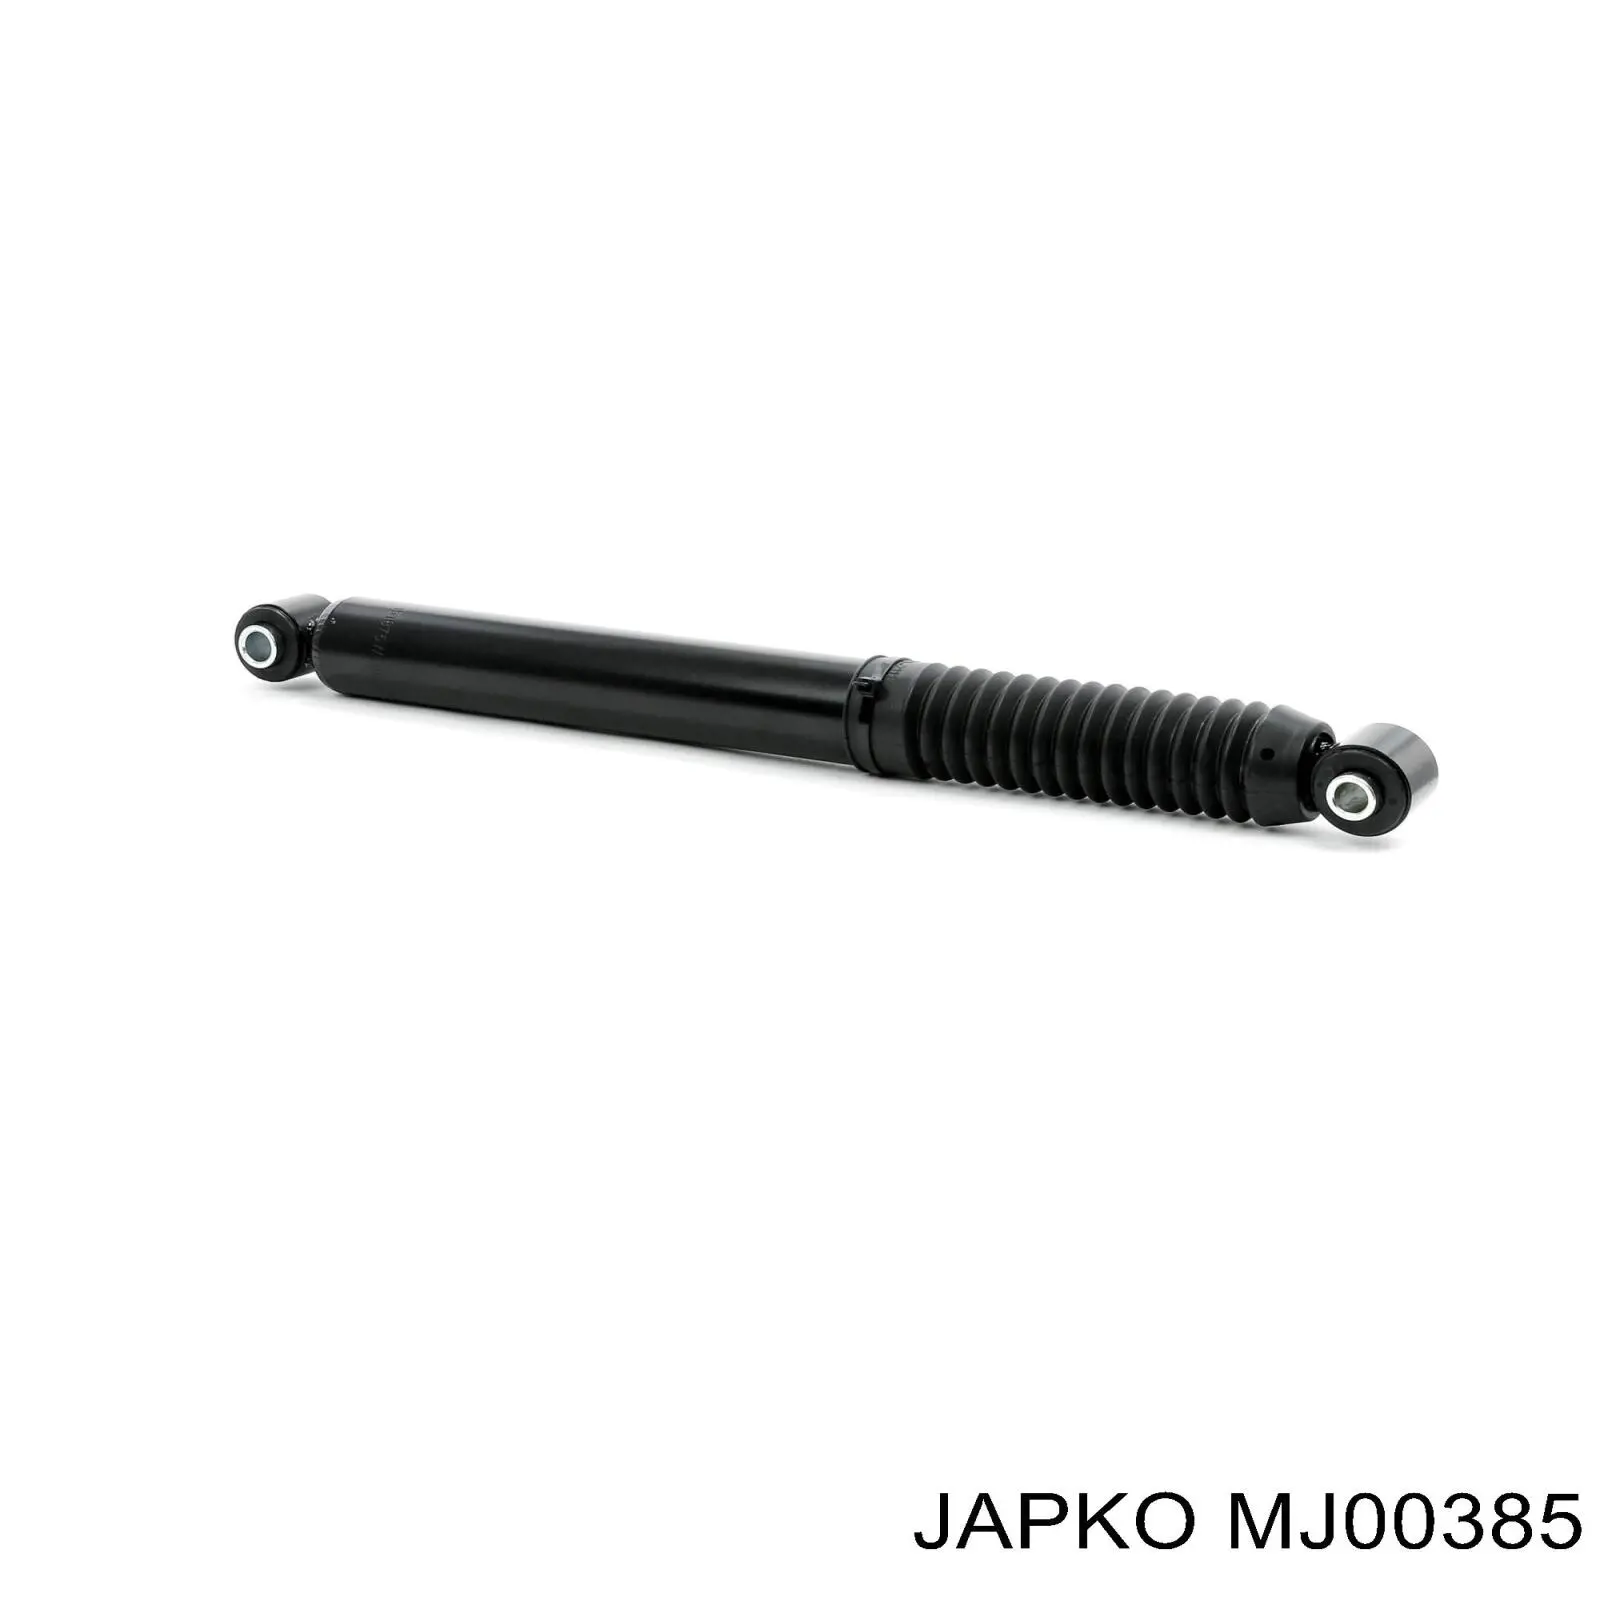 MJ00385 Japko amortiguador trasero